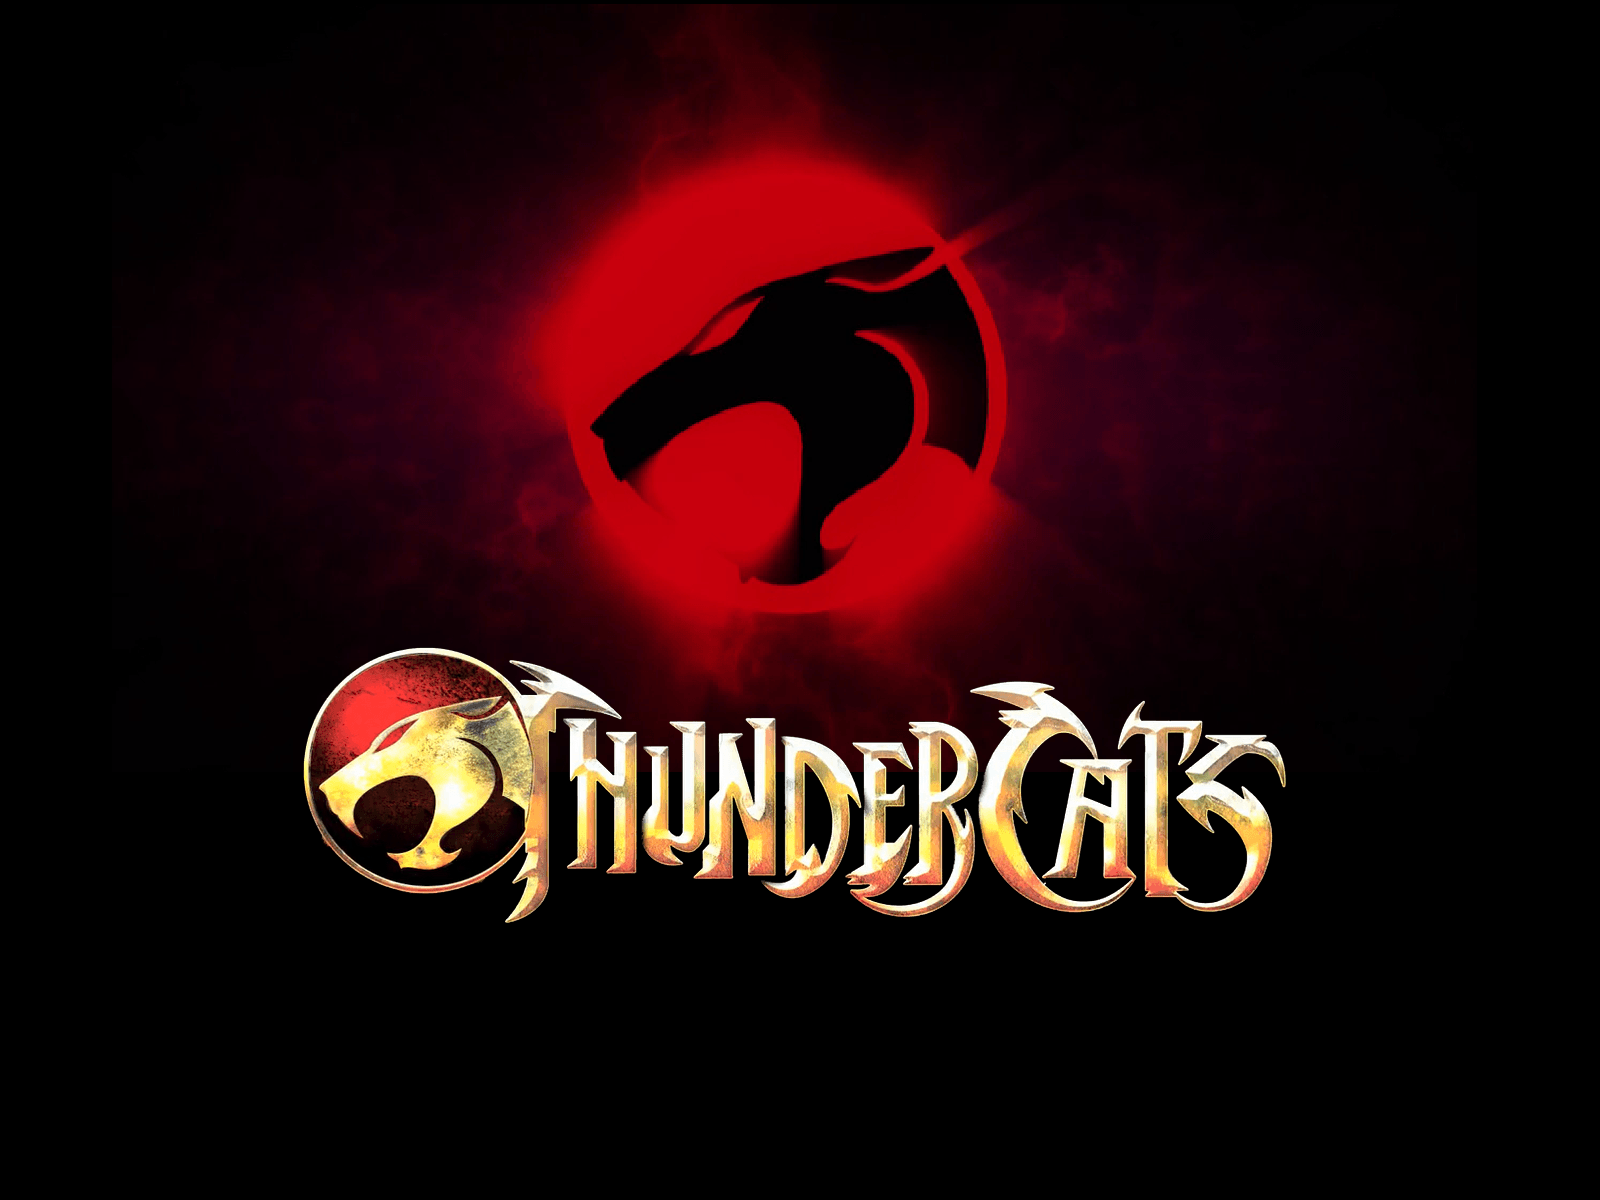 ThunderCats Wallpaper HD